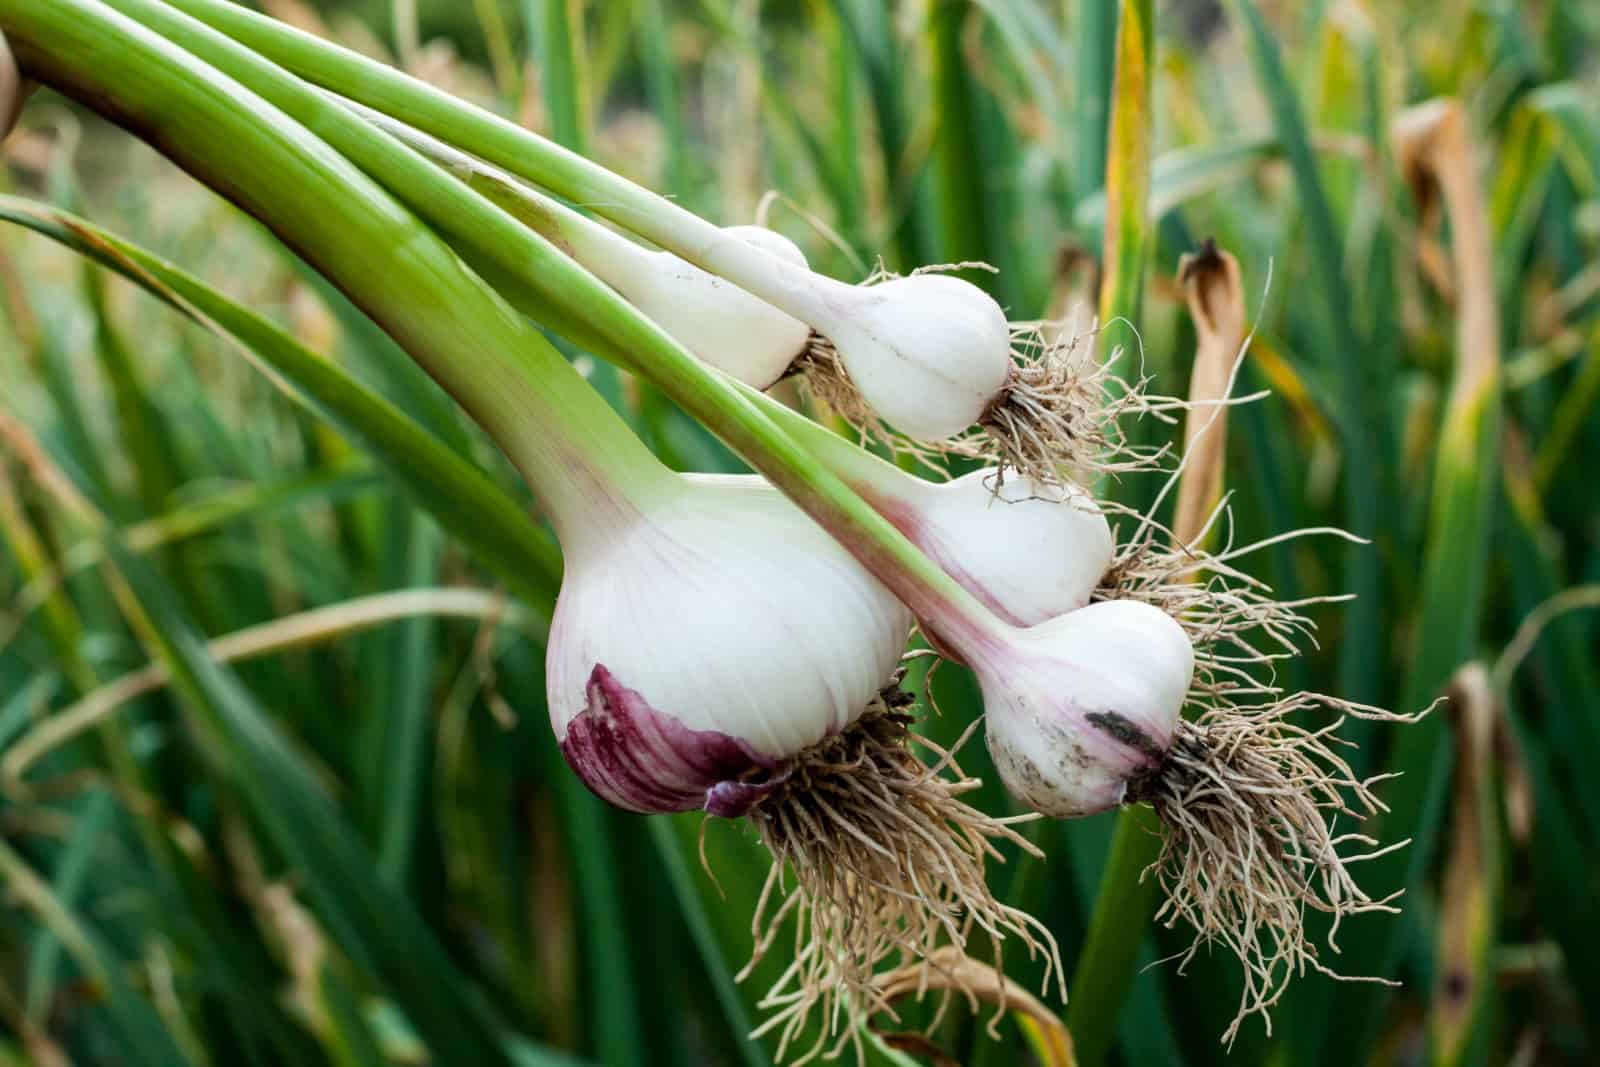 Harvested garlic close-up